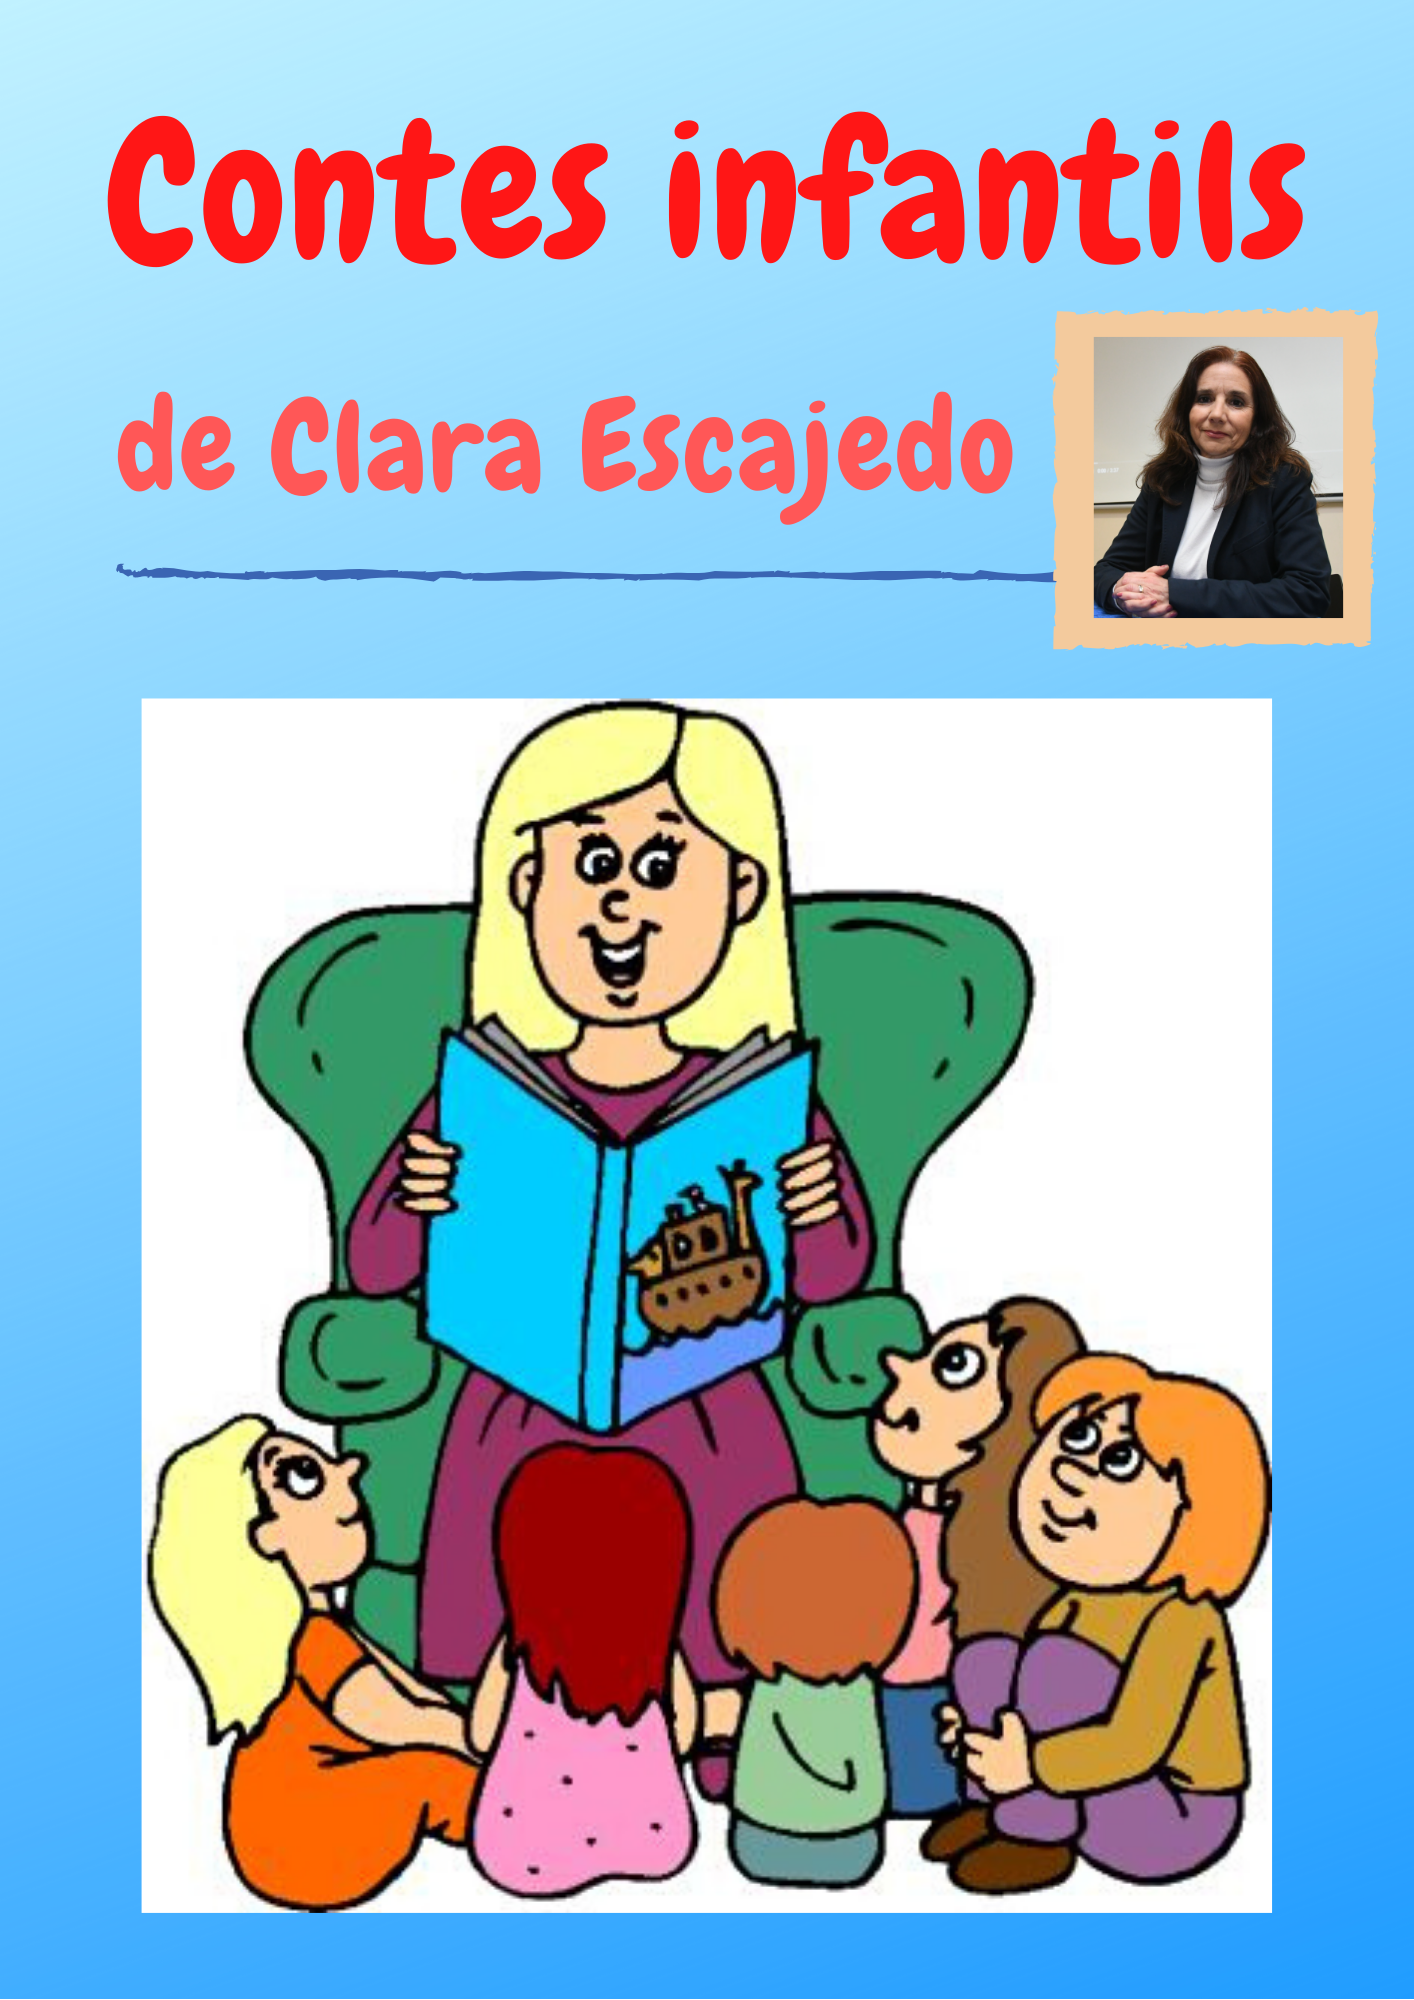 Contes de Clara Escajedo per llegir a casa